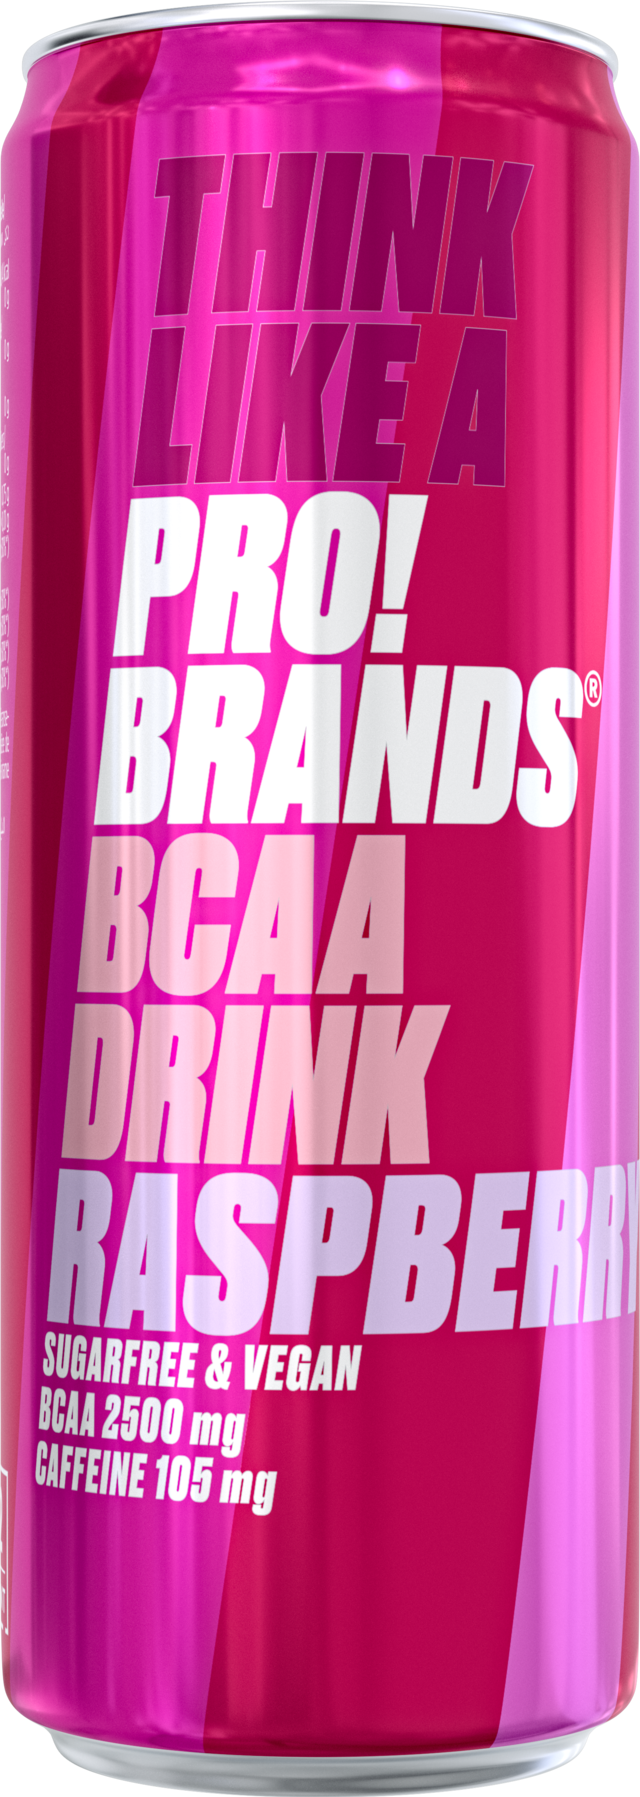 PB_BCAA_Drink_Raspberry_export_330ml.1.png